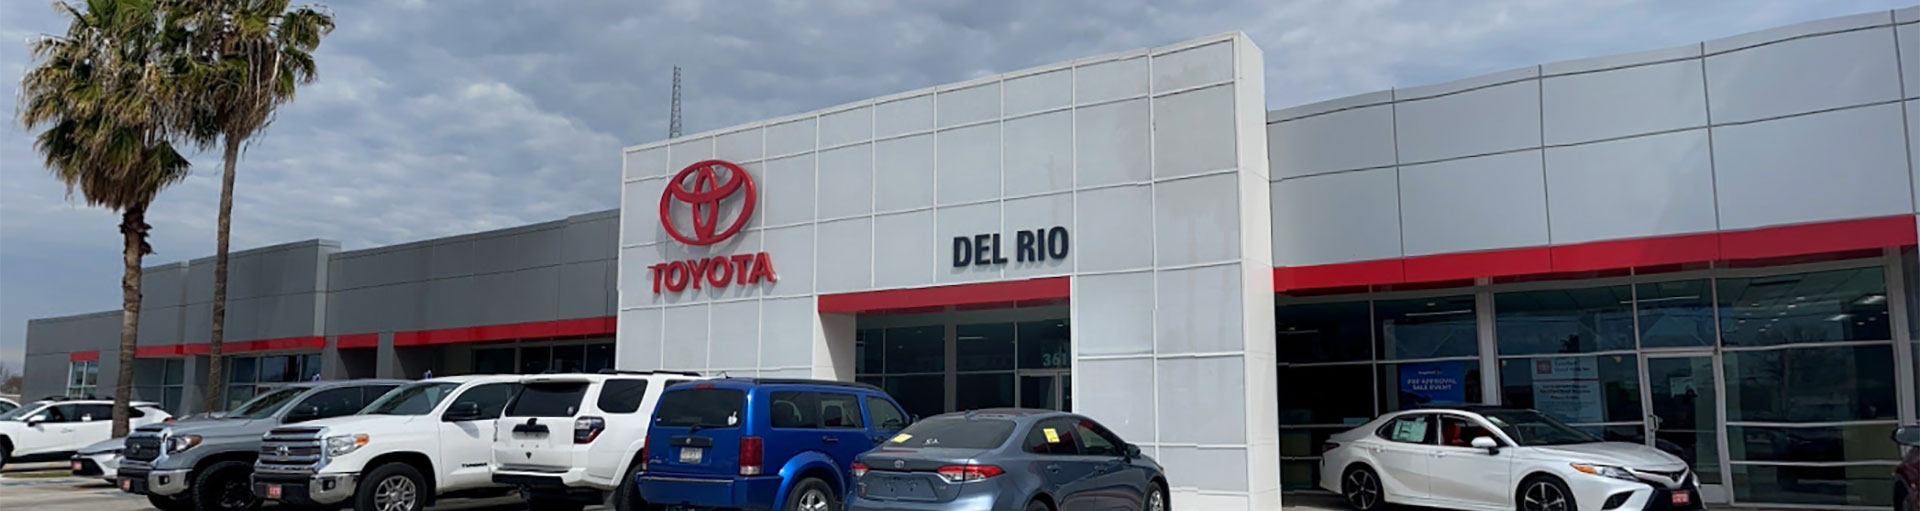 Toyota Del Rio Recall Department